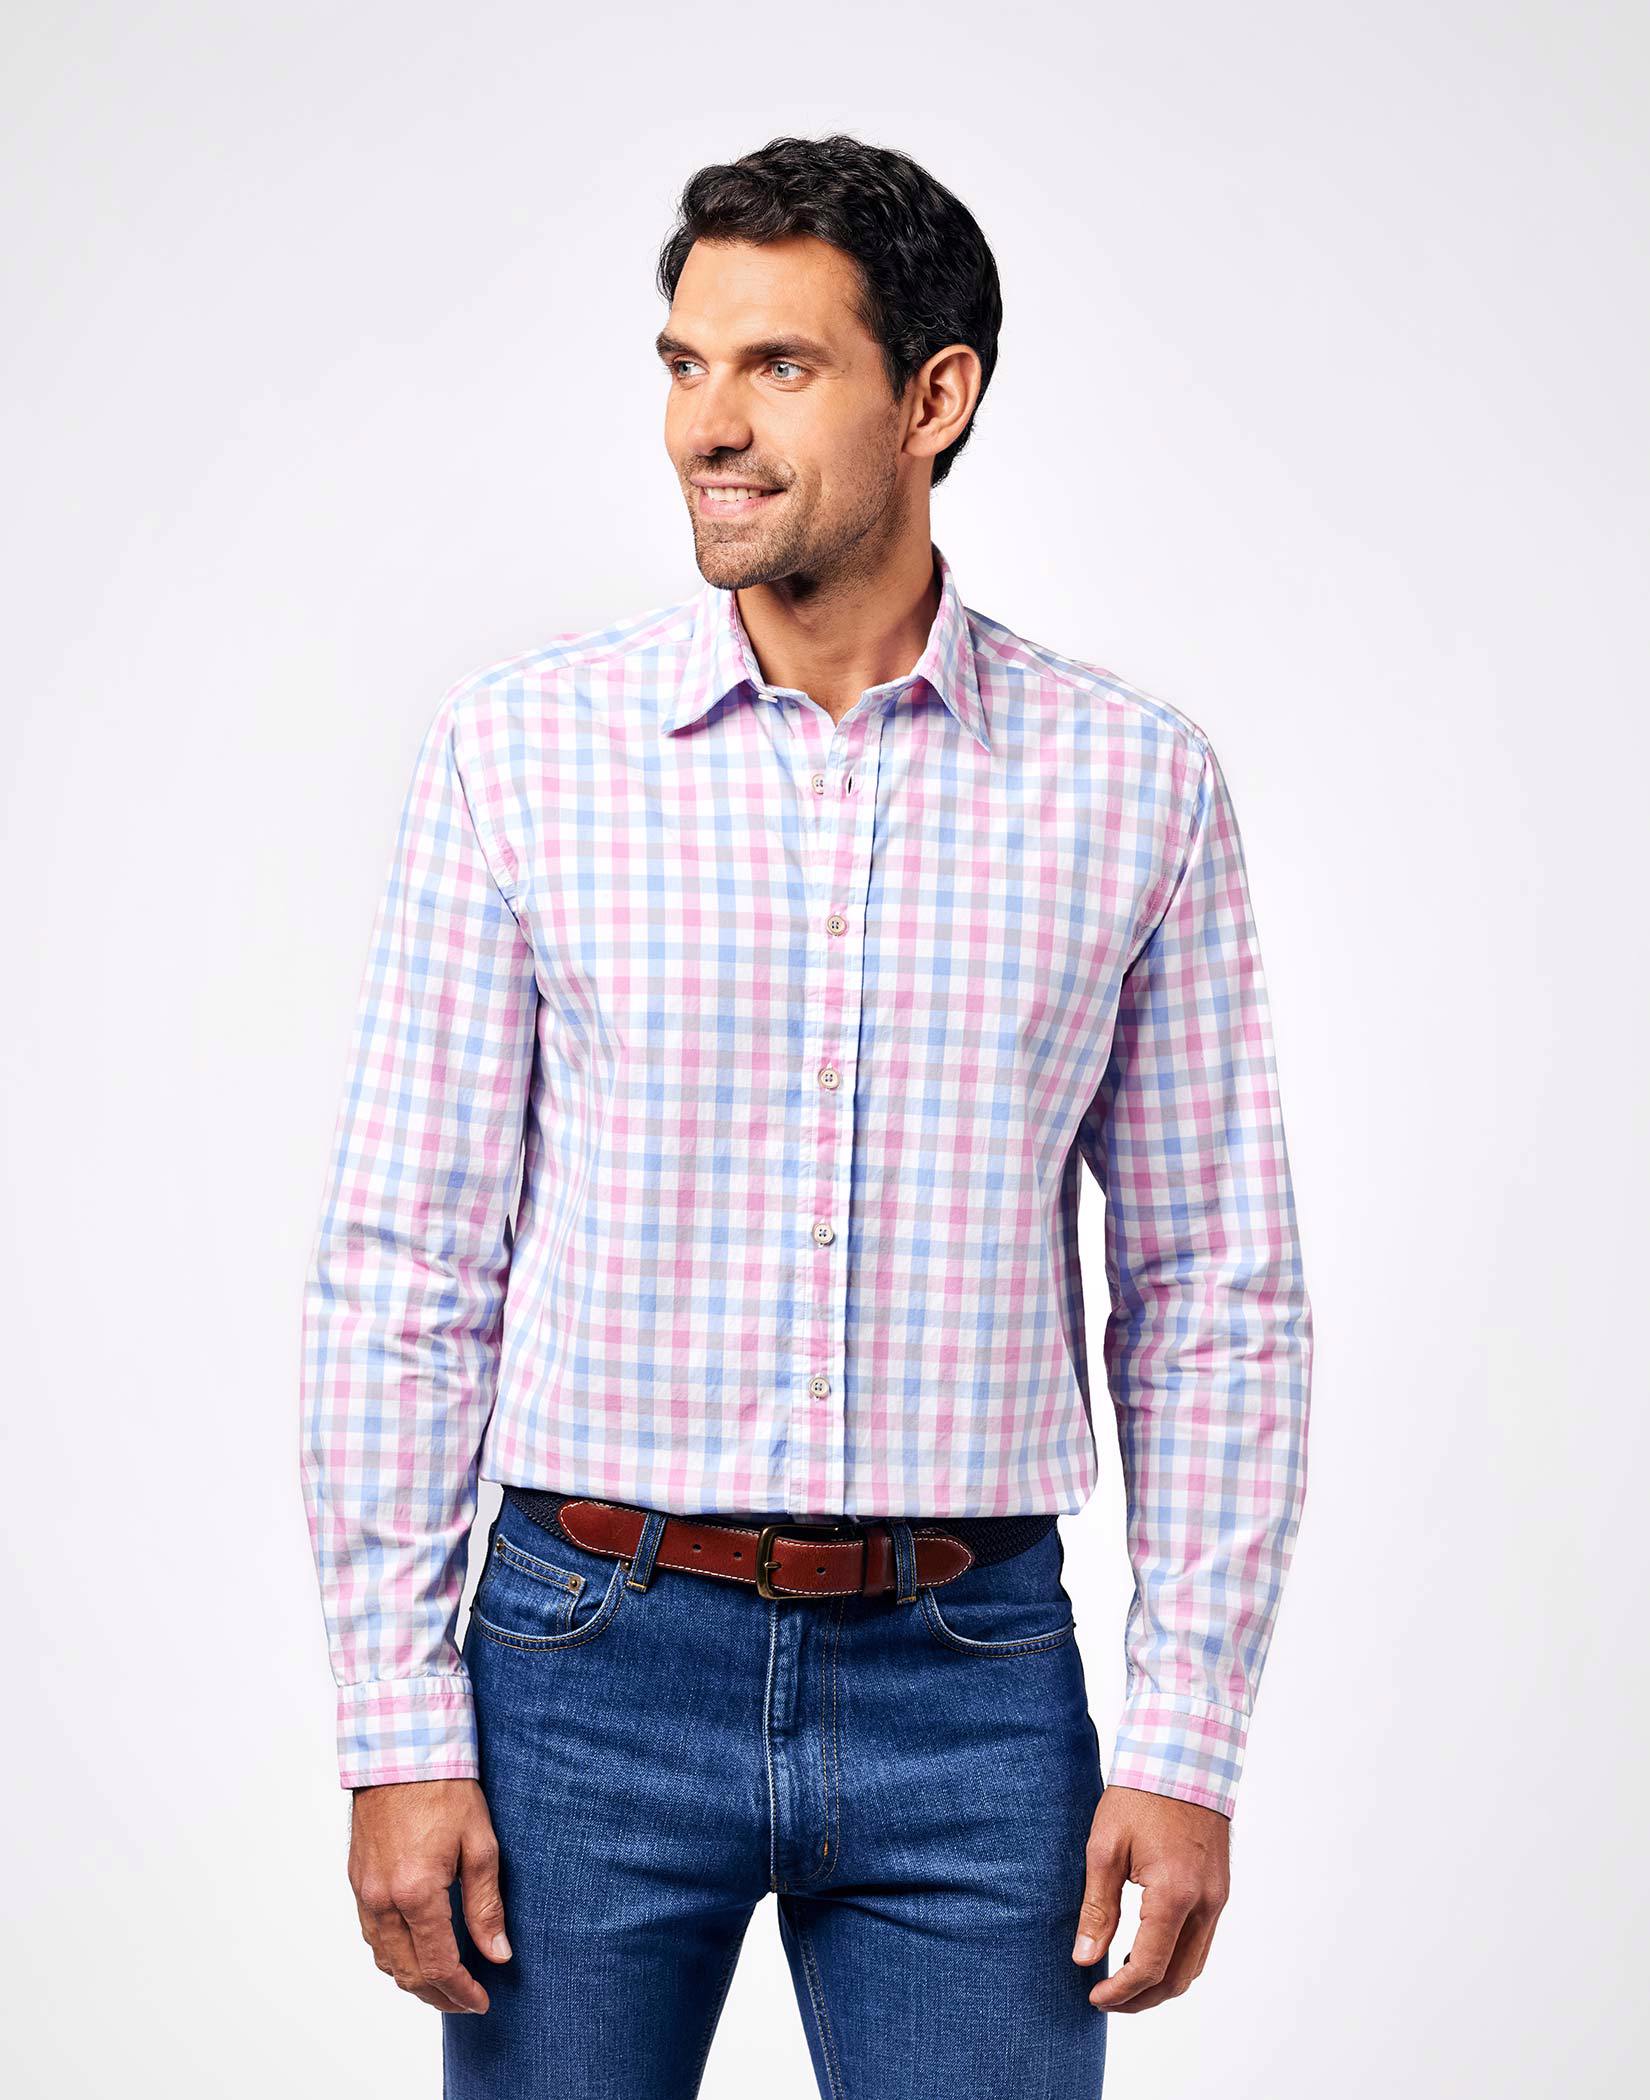 Gingham Check Shirt - Pink/Blue